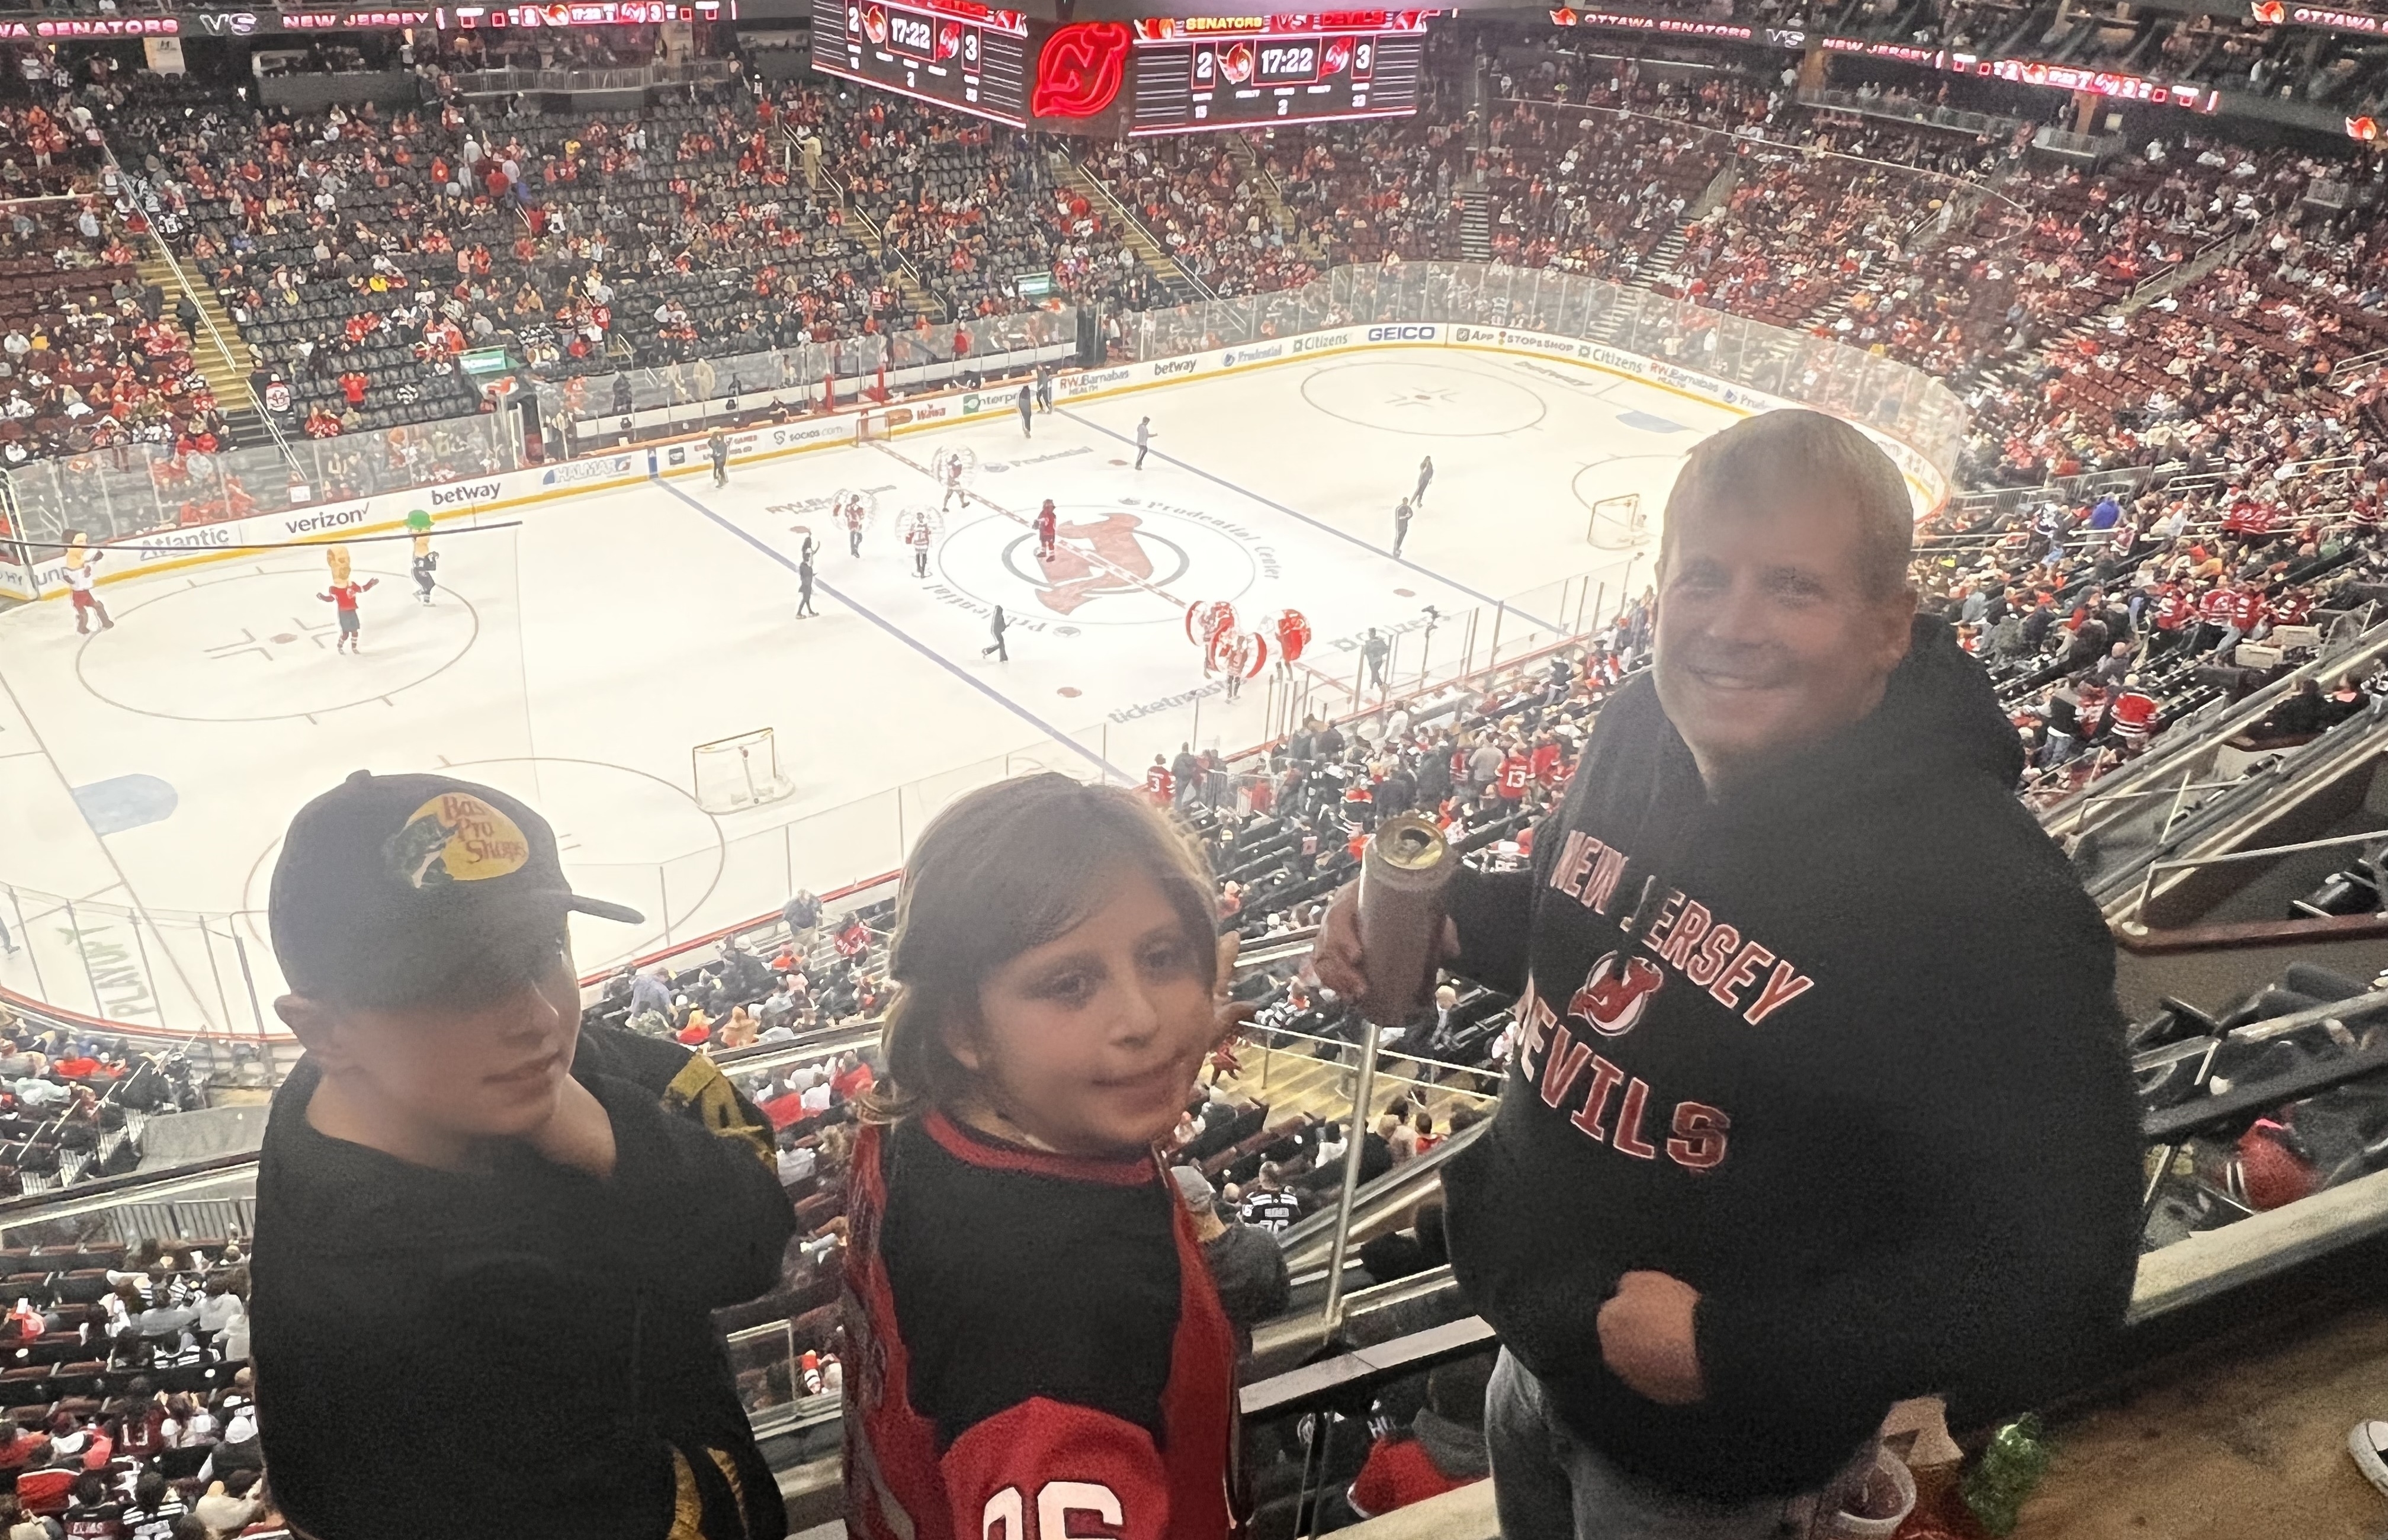 NJ Devils vs. Ottawa Senators game photos at Prudential Center